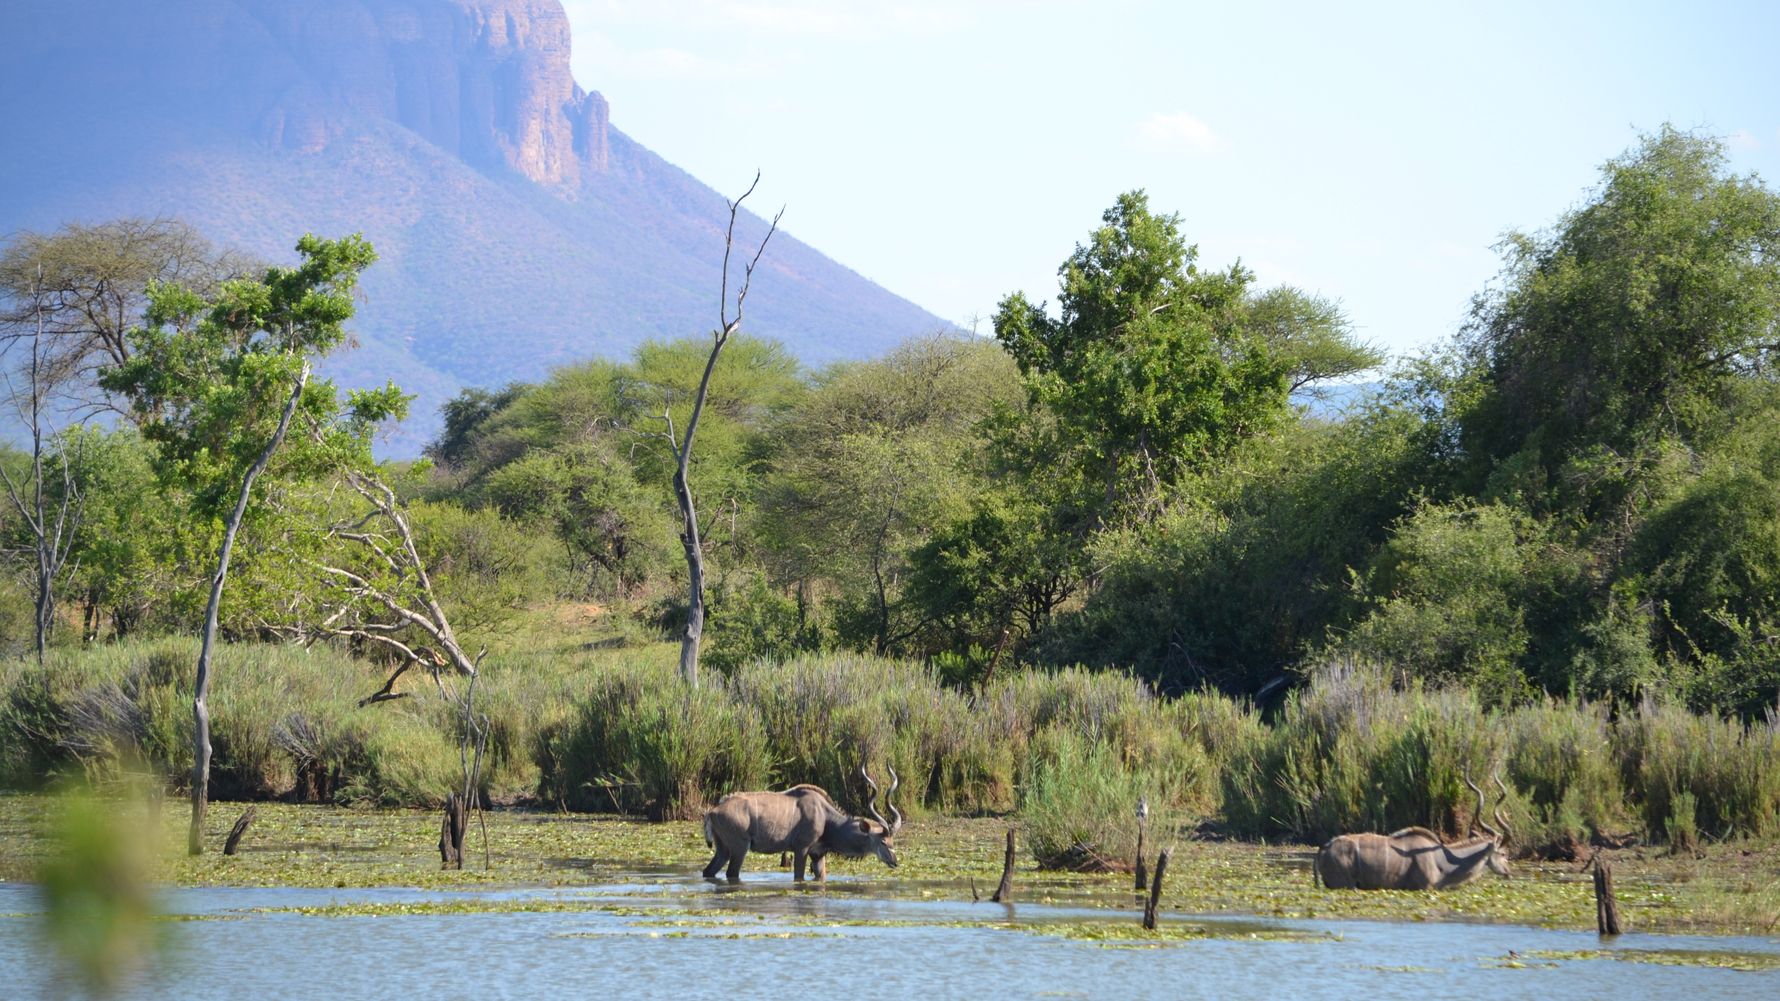 Blog – South Africa: Marakele National Park ⋅ Natucate